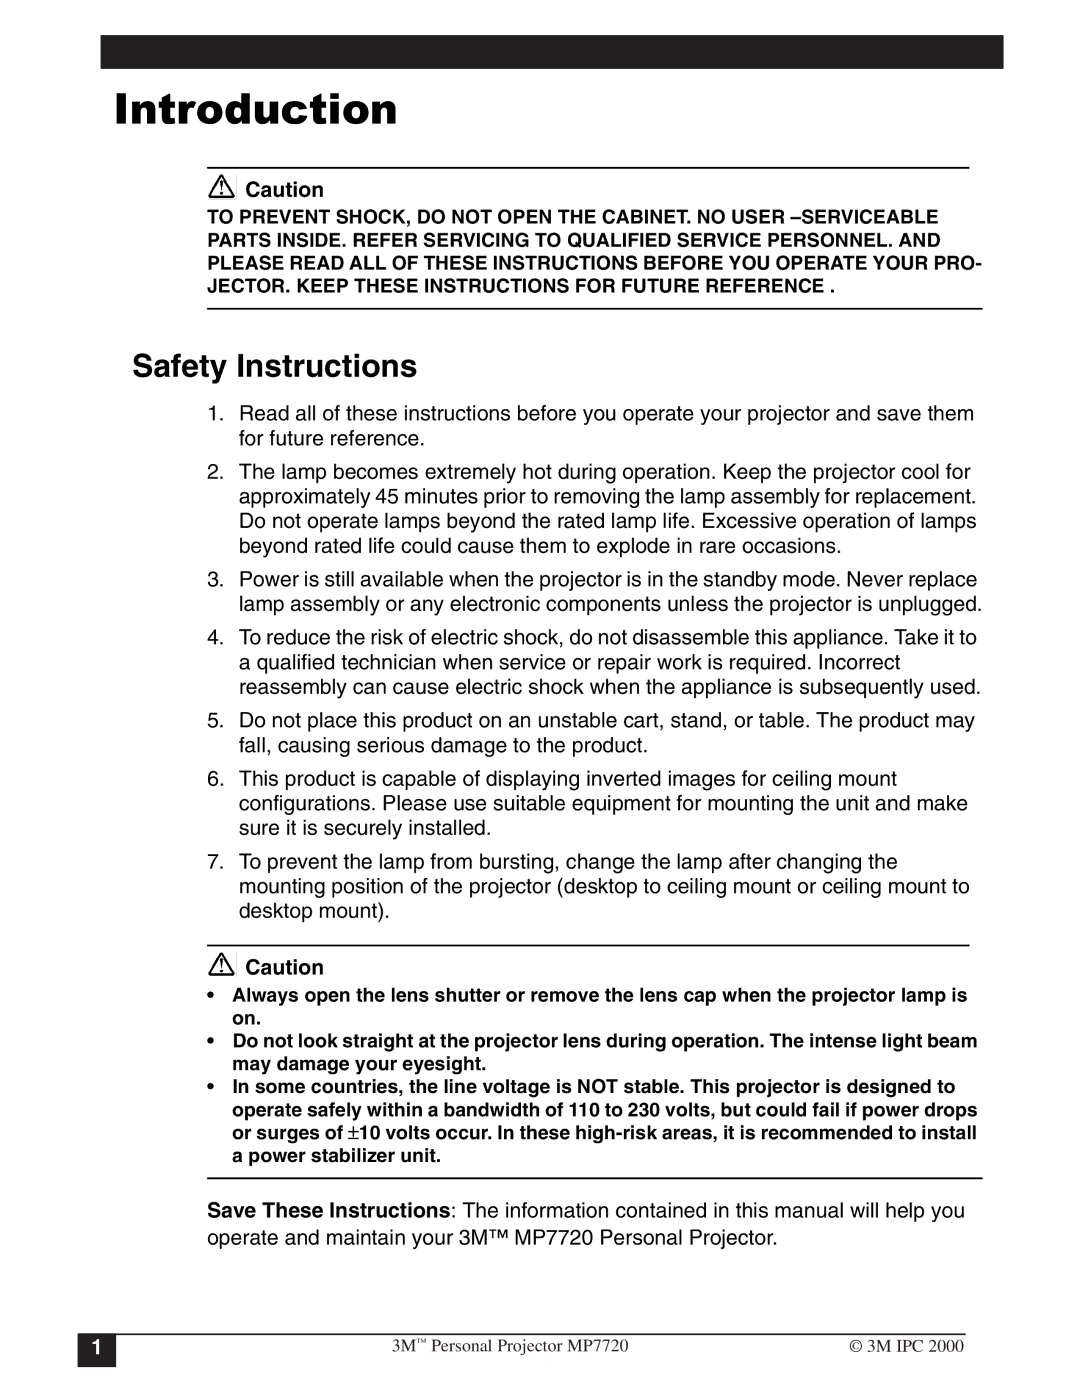 3M MP7720 manual Qwurgxfwlrq, Safety Instructions 